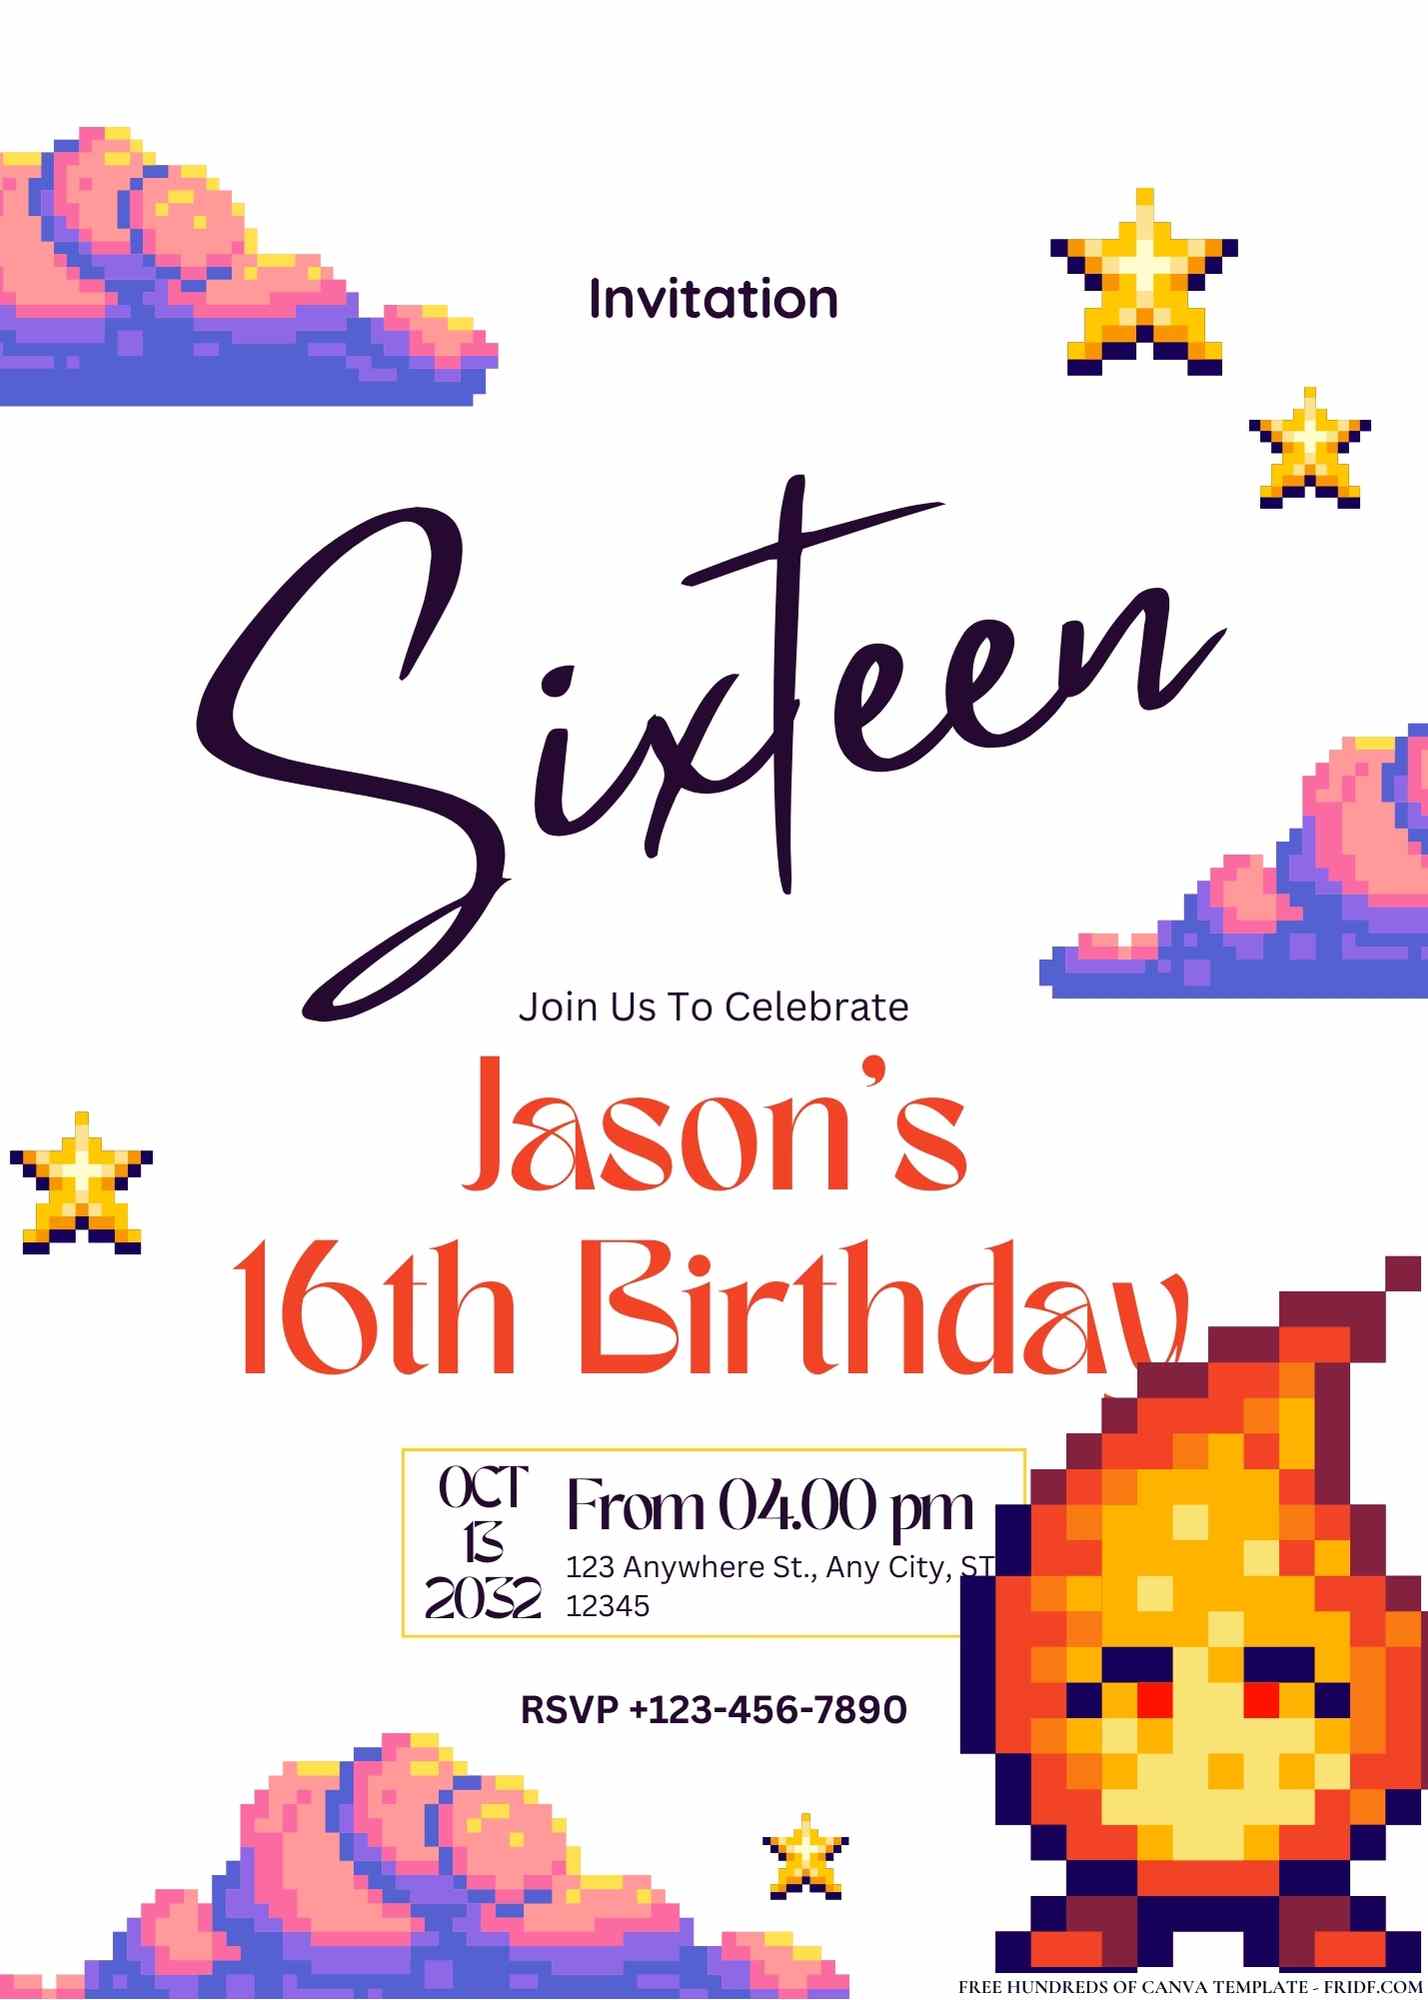 FREE Retro Gaming Arcade Birthday Invitations